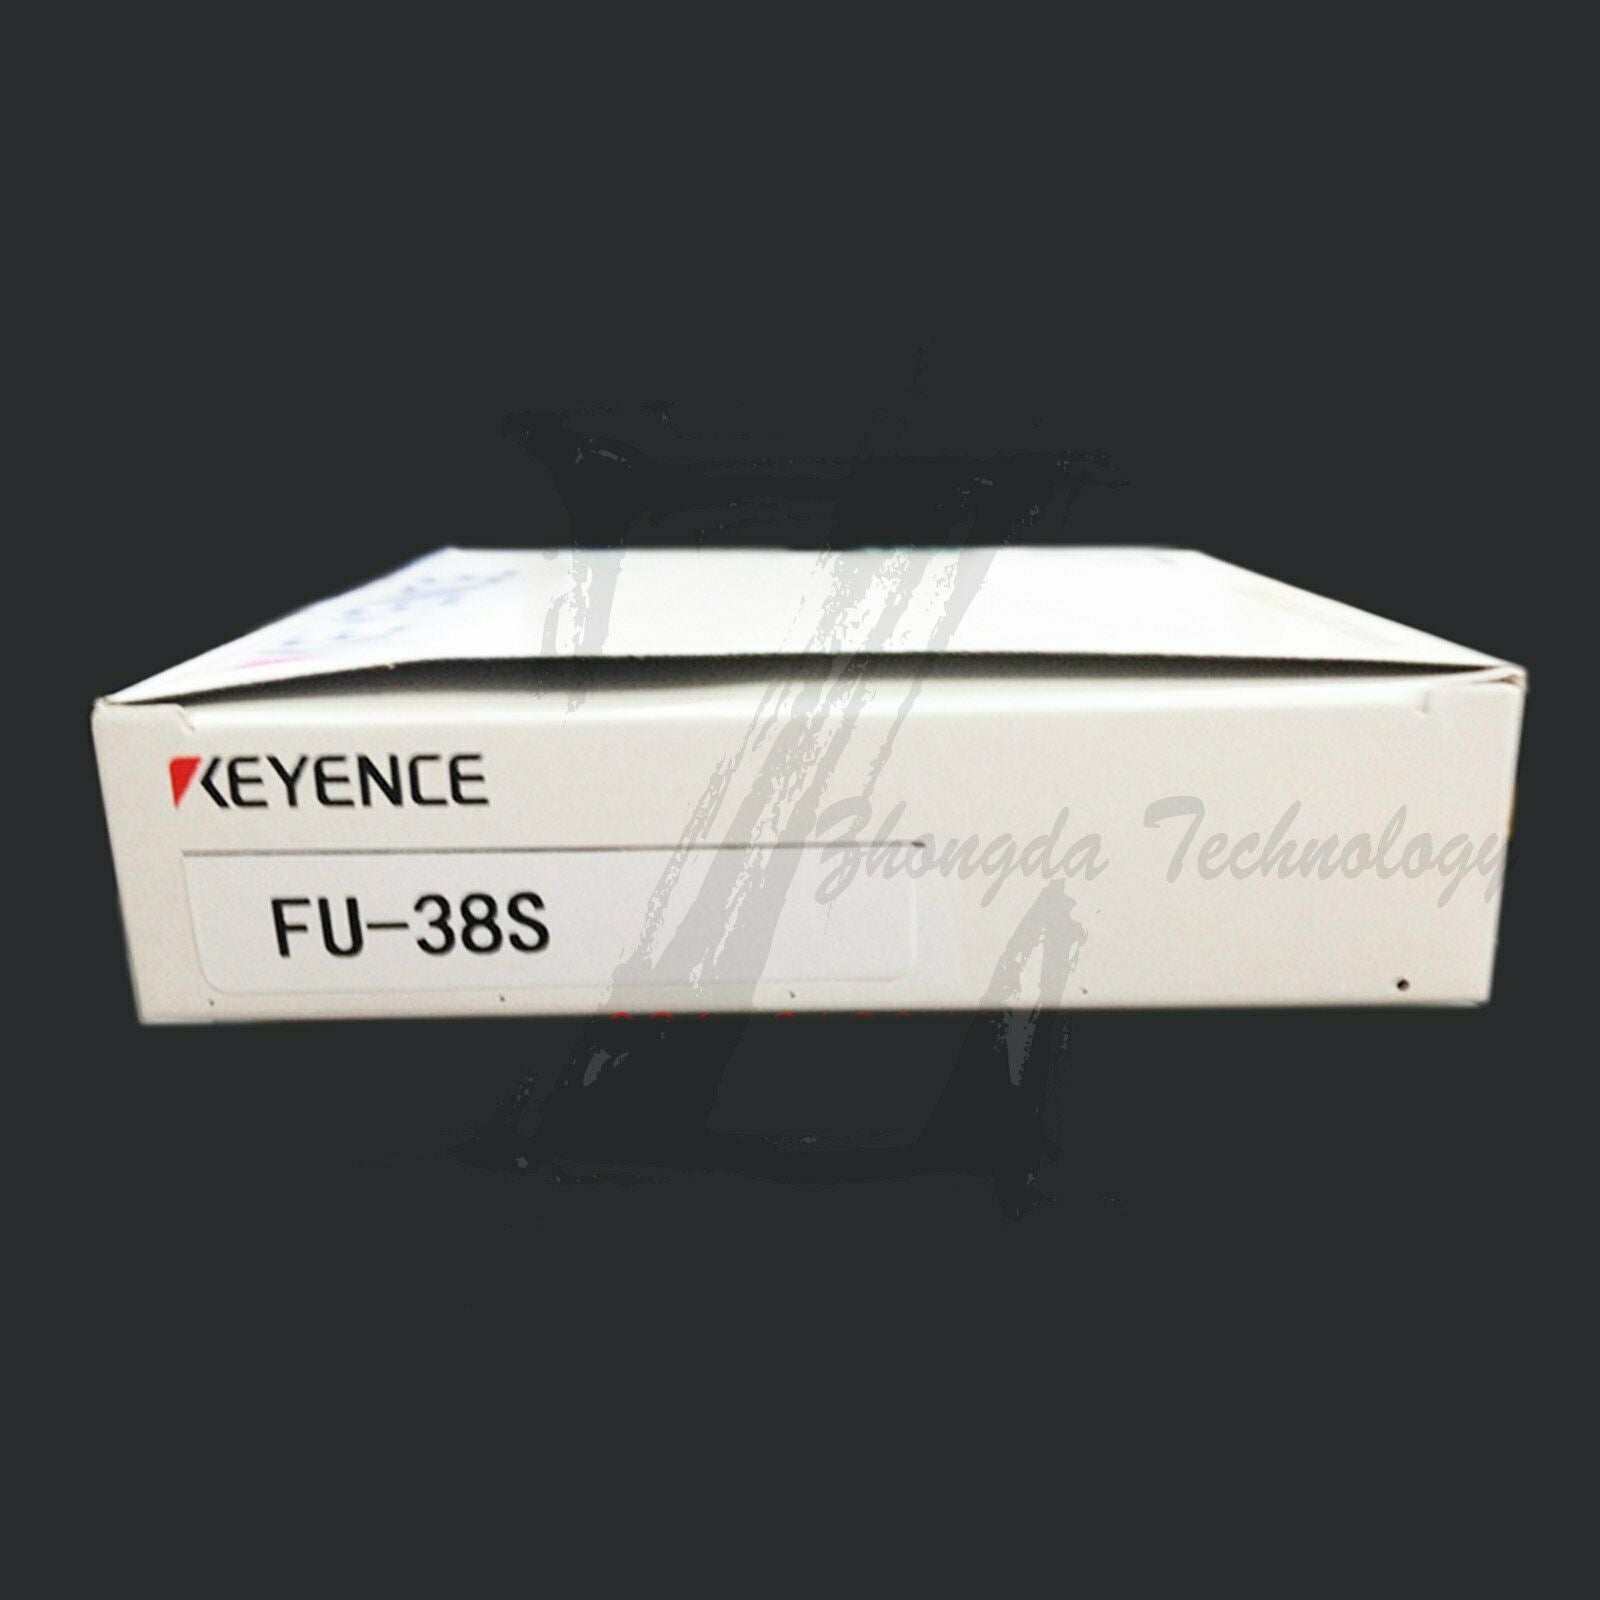 NEW IN BOX 1PC KEYENCE Fiber Amplifier Sensor FU-38S FU38S